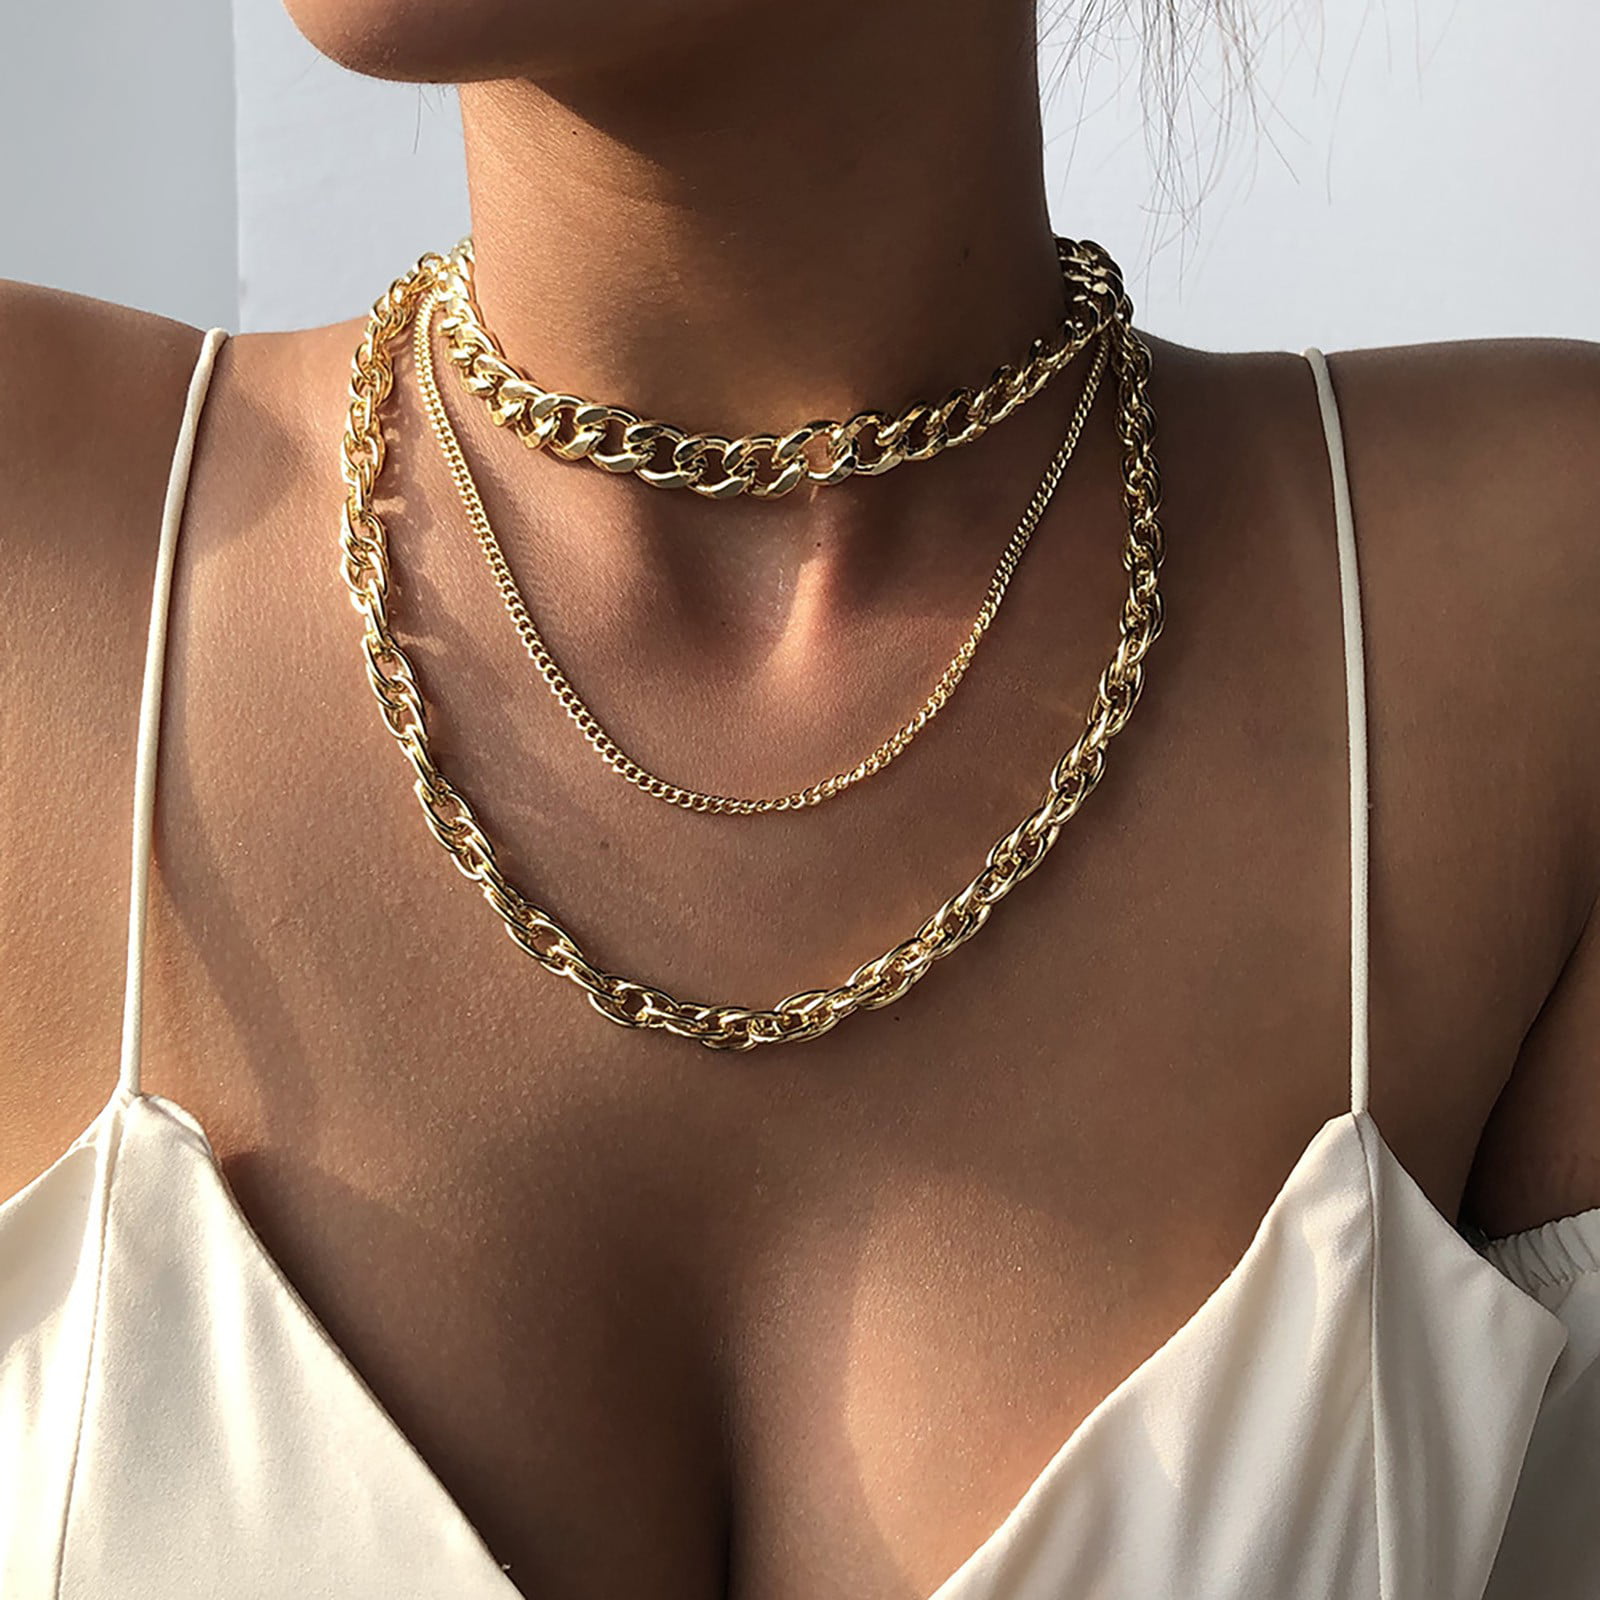  Anneome 300pcs Trendy Necklace Trendy Jewelry Fashion